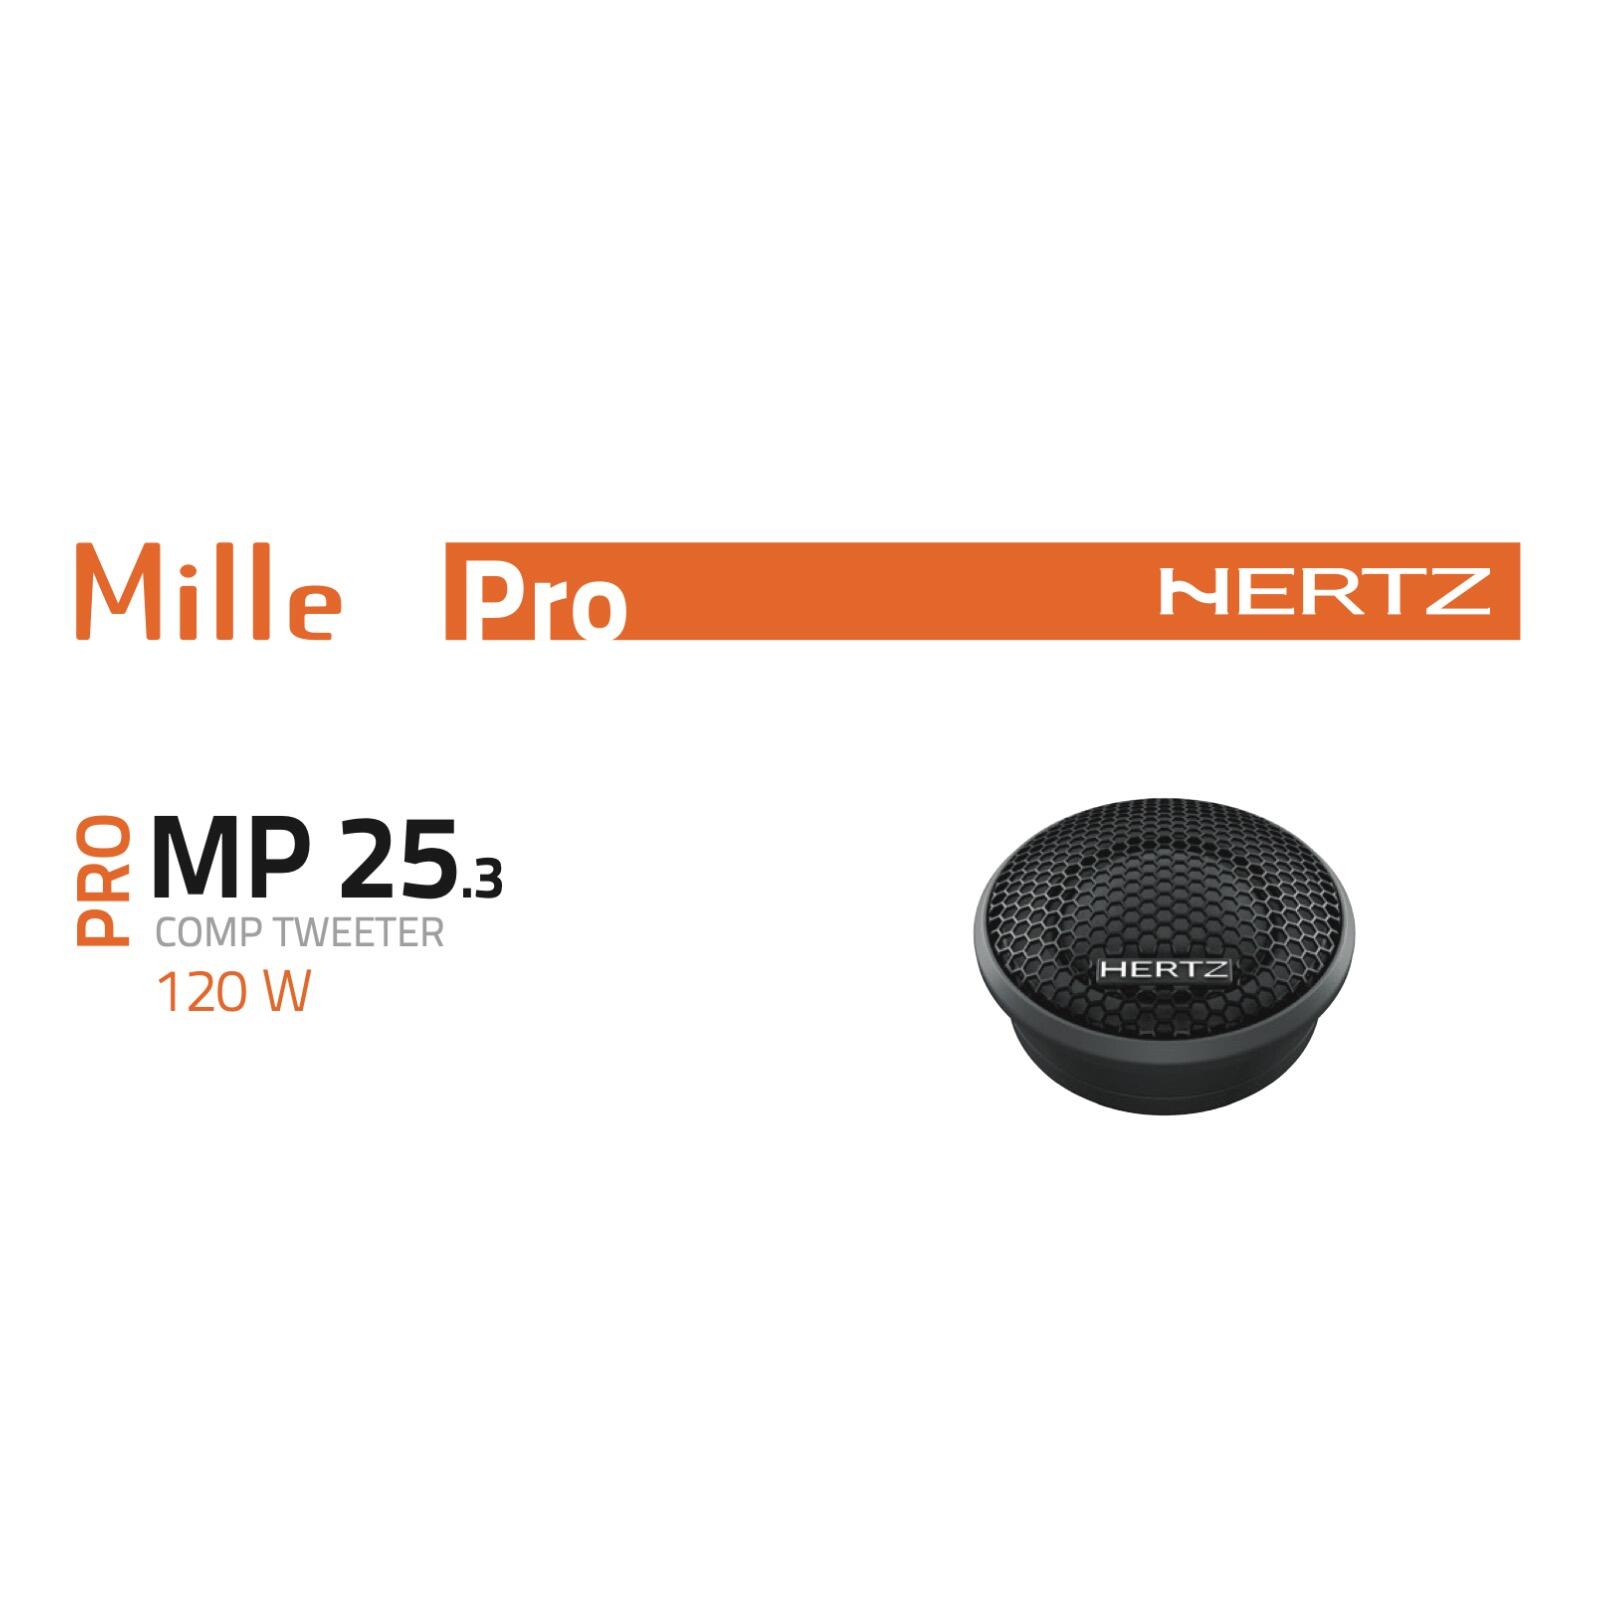 Hertz Mille Pro MP 25.3 Car Audio Tetolon Dome 25mm Tweeters 120w Peak Pair